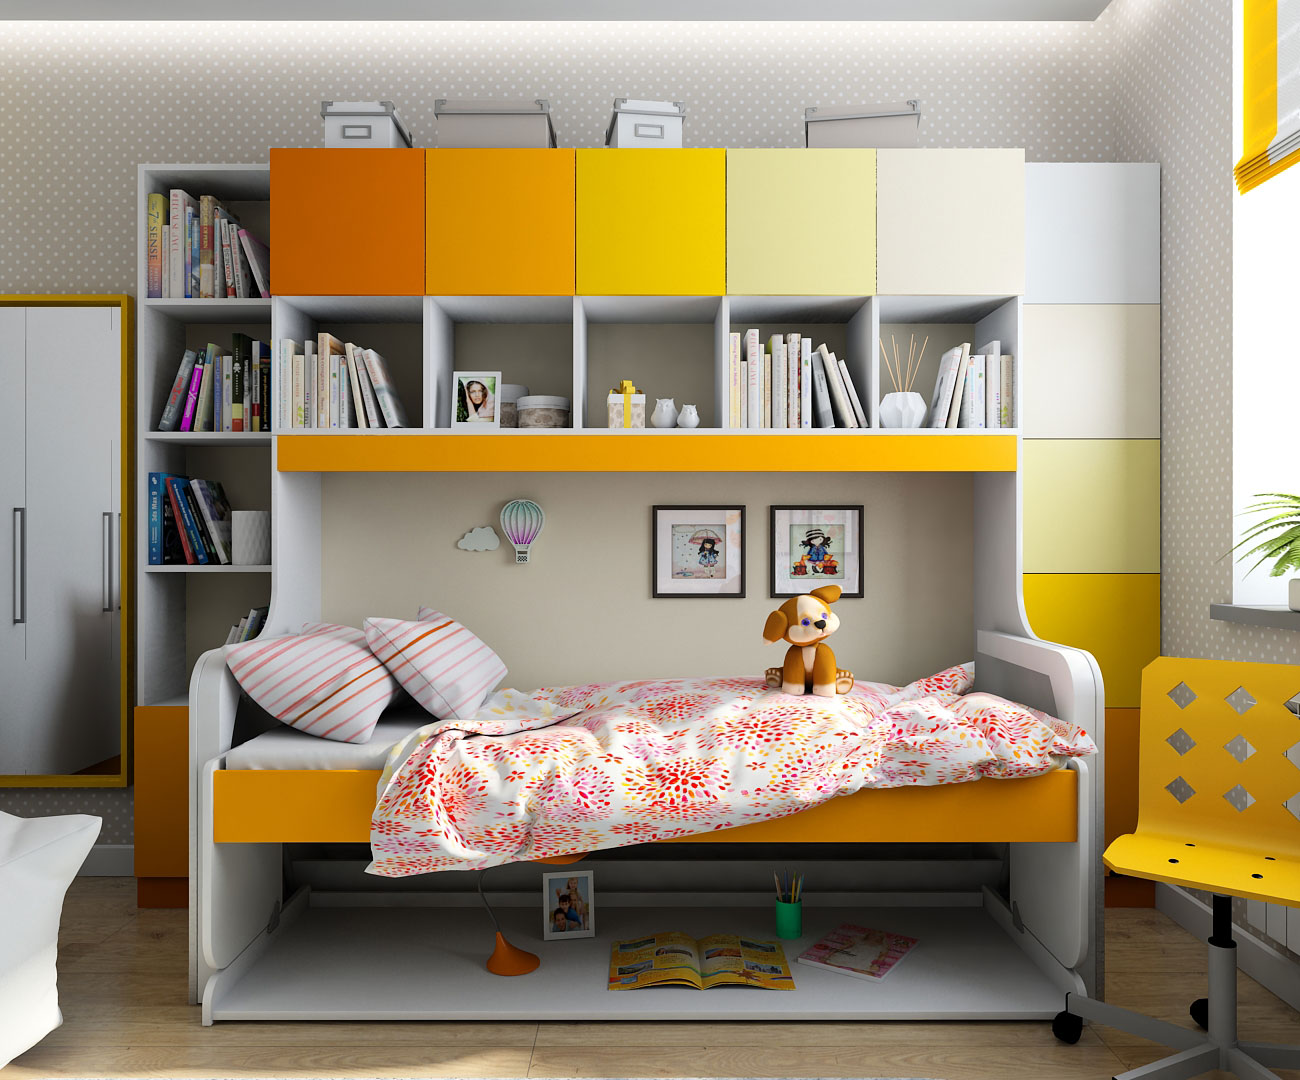 Children's interior design for a little girl in Chernigov in 3d max vray 1.5 image